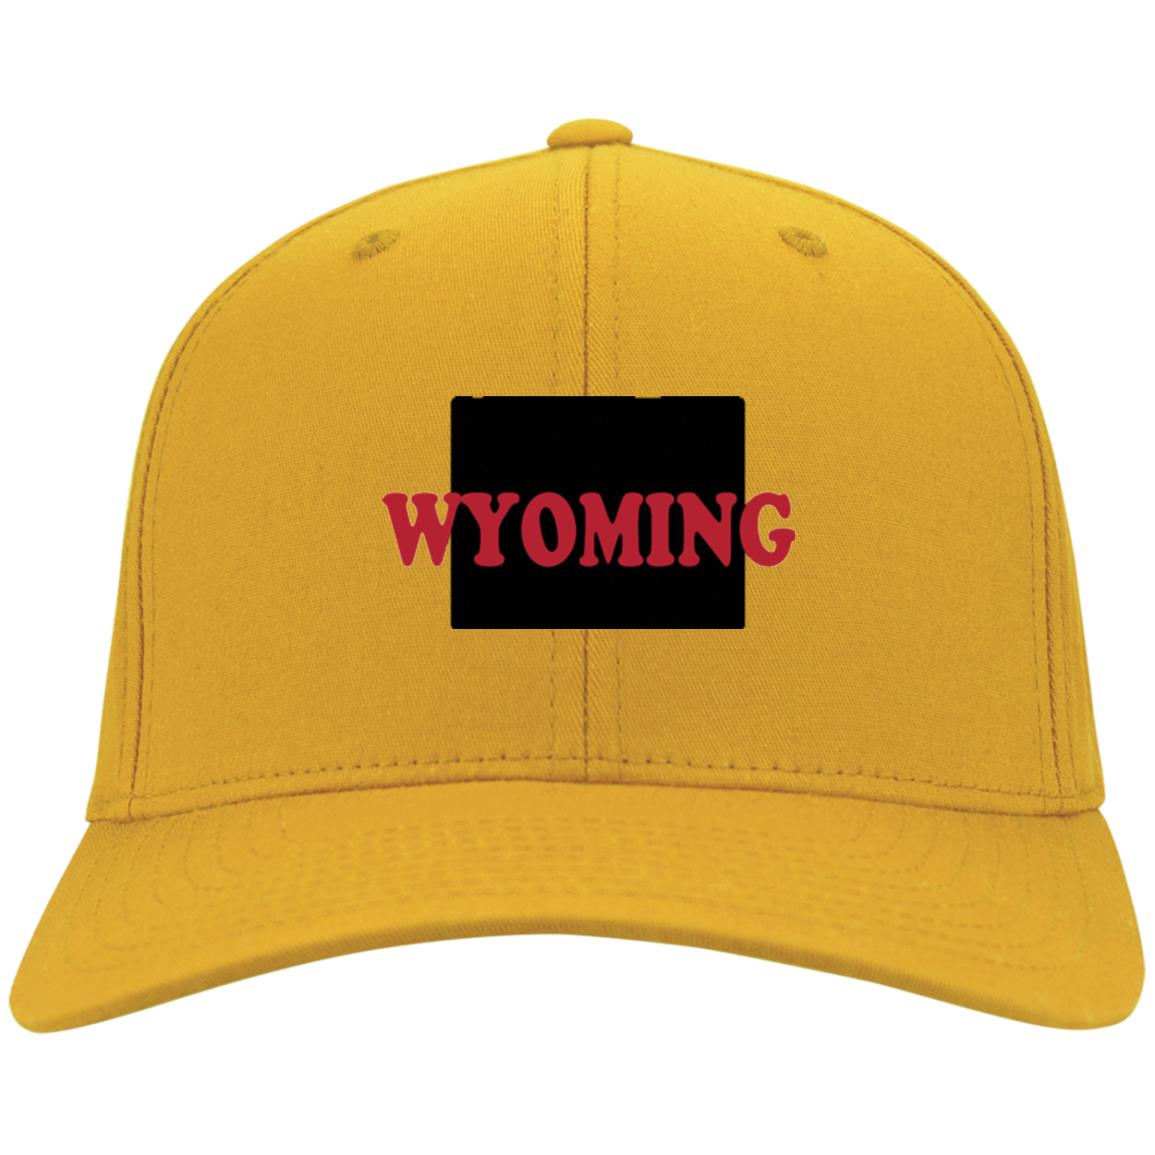 Wyoming State Hat